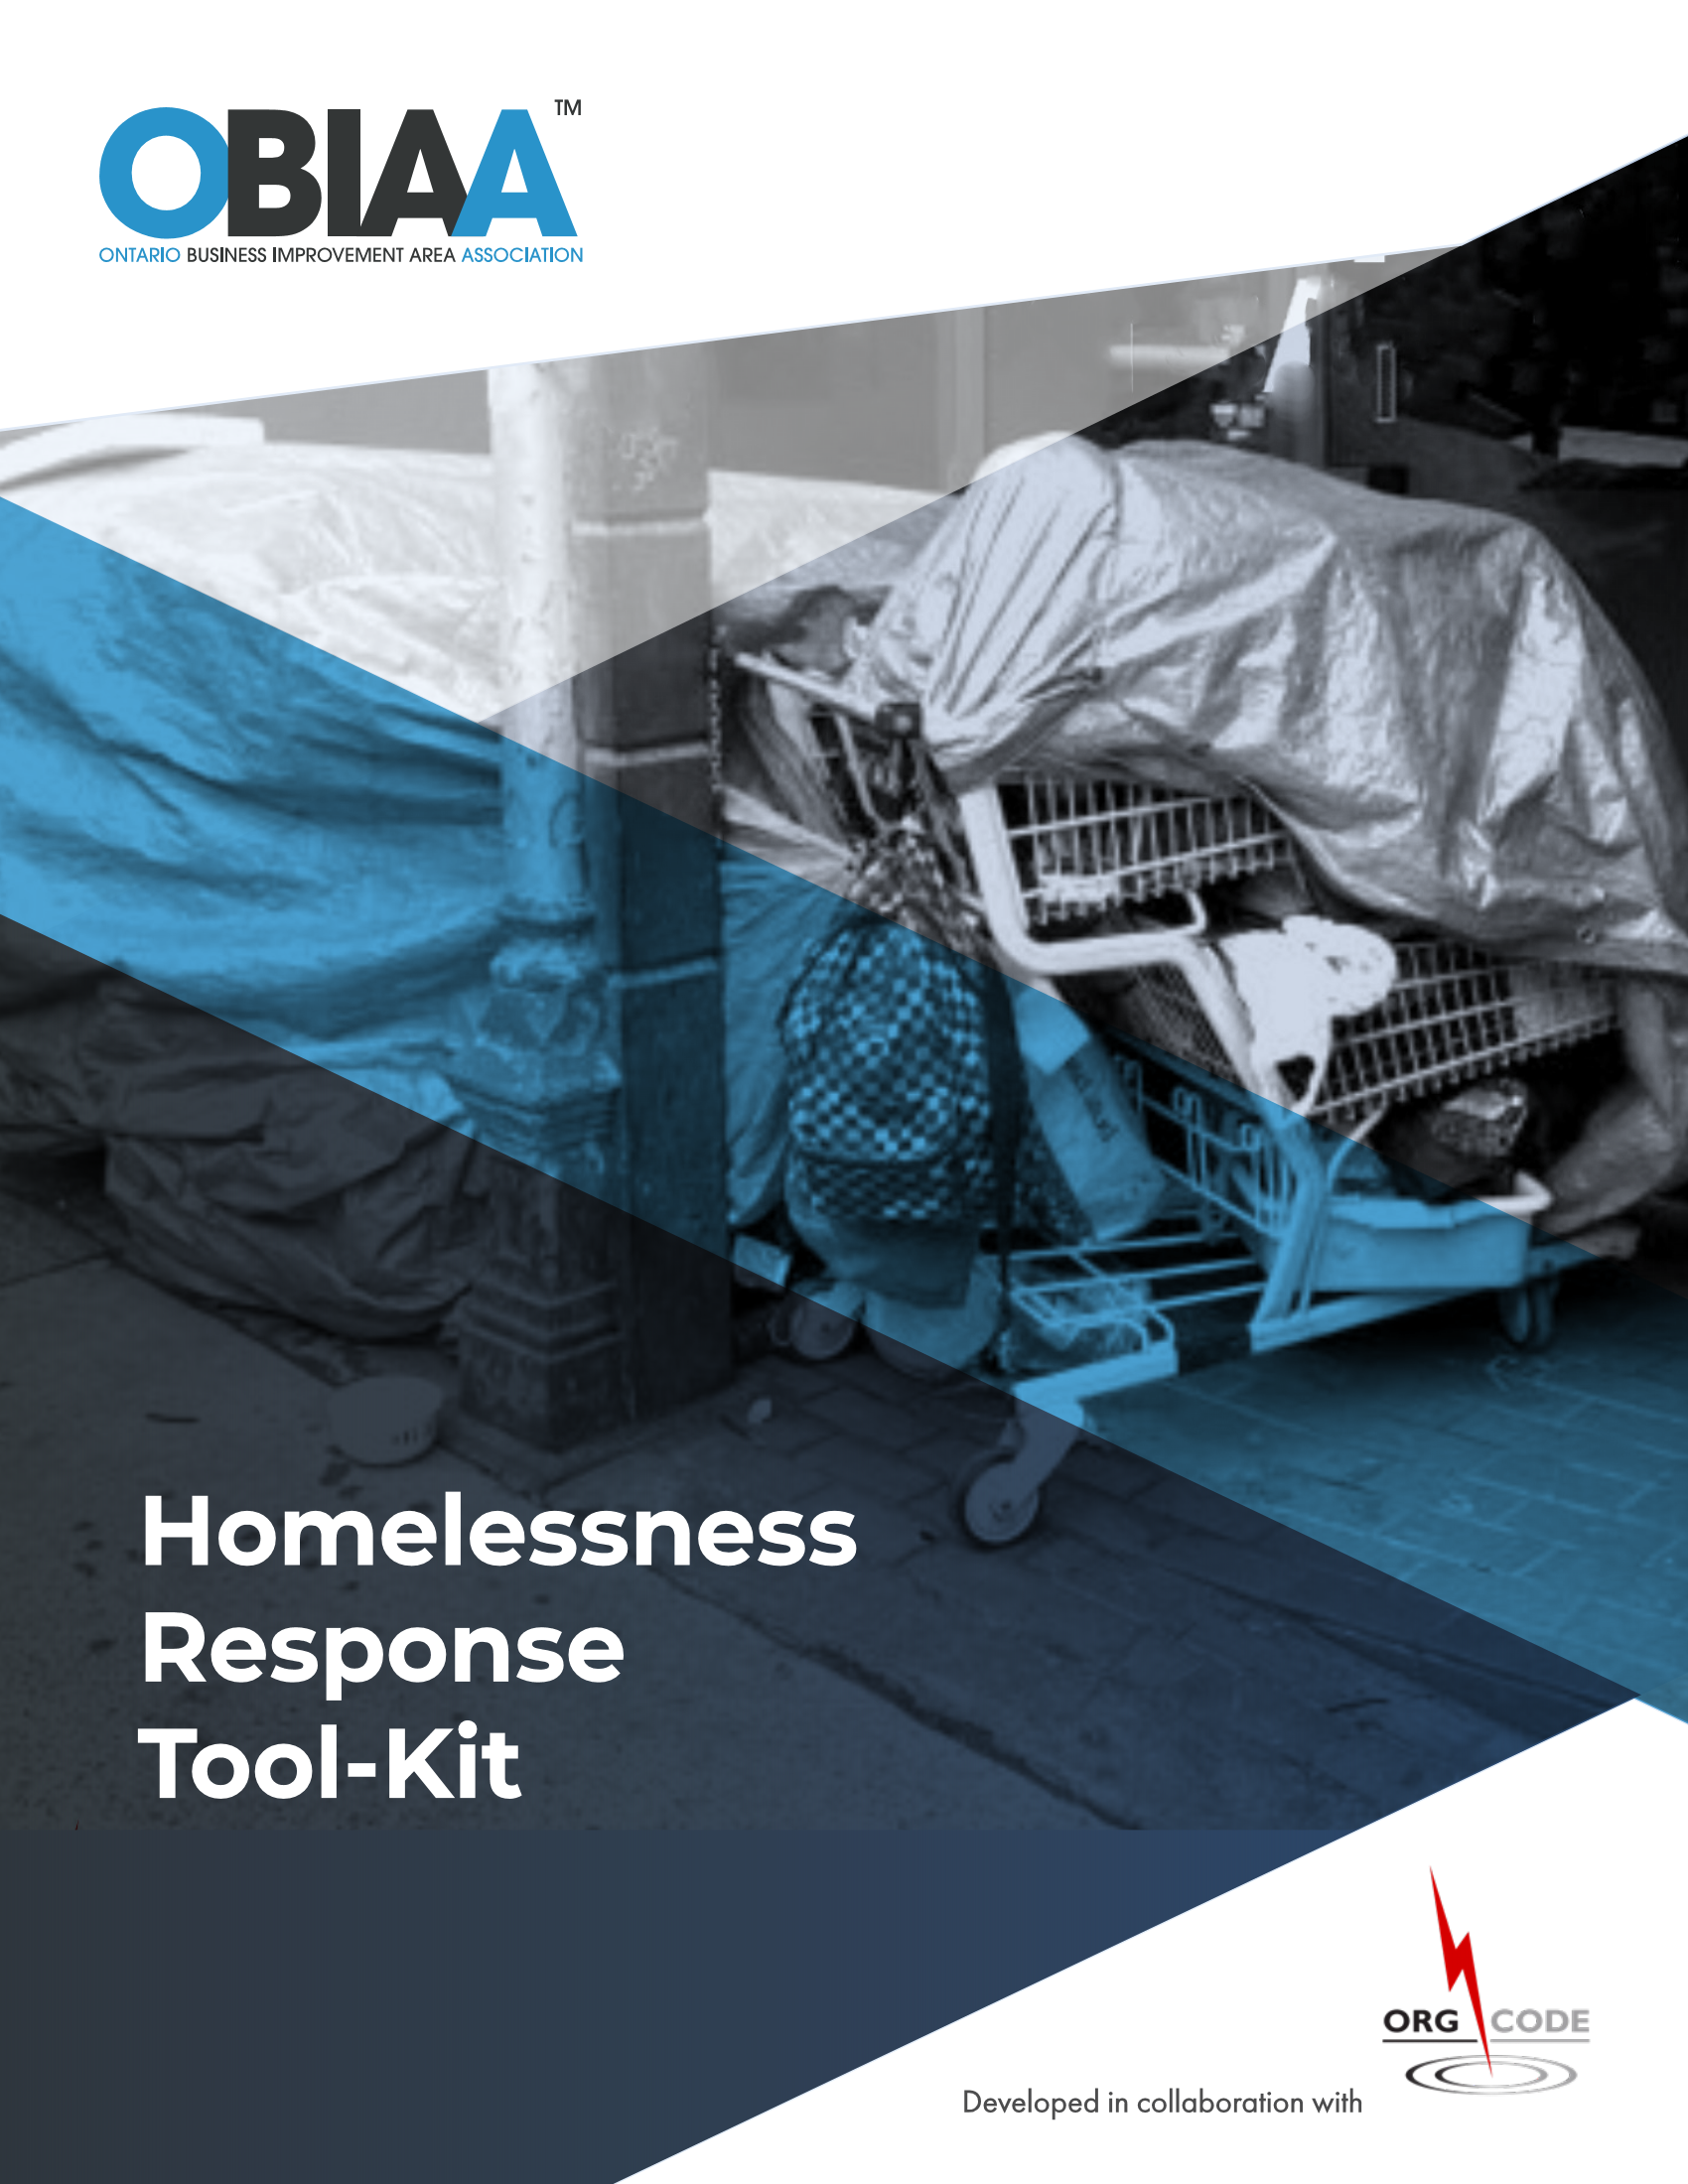 OBIAA’s Homelessness Response Toolkit for BIAs